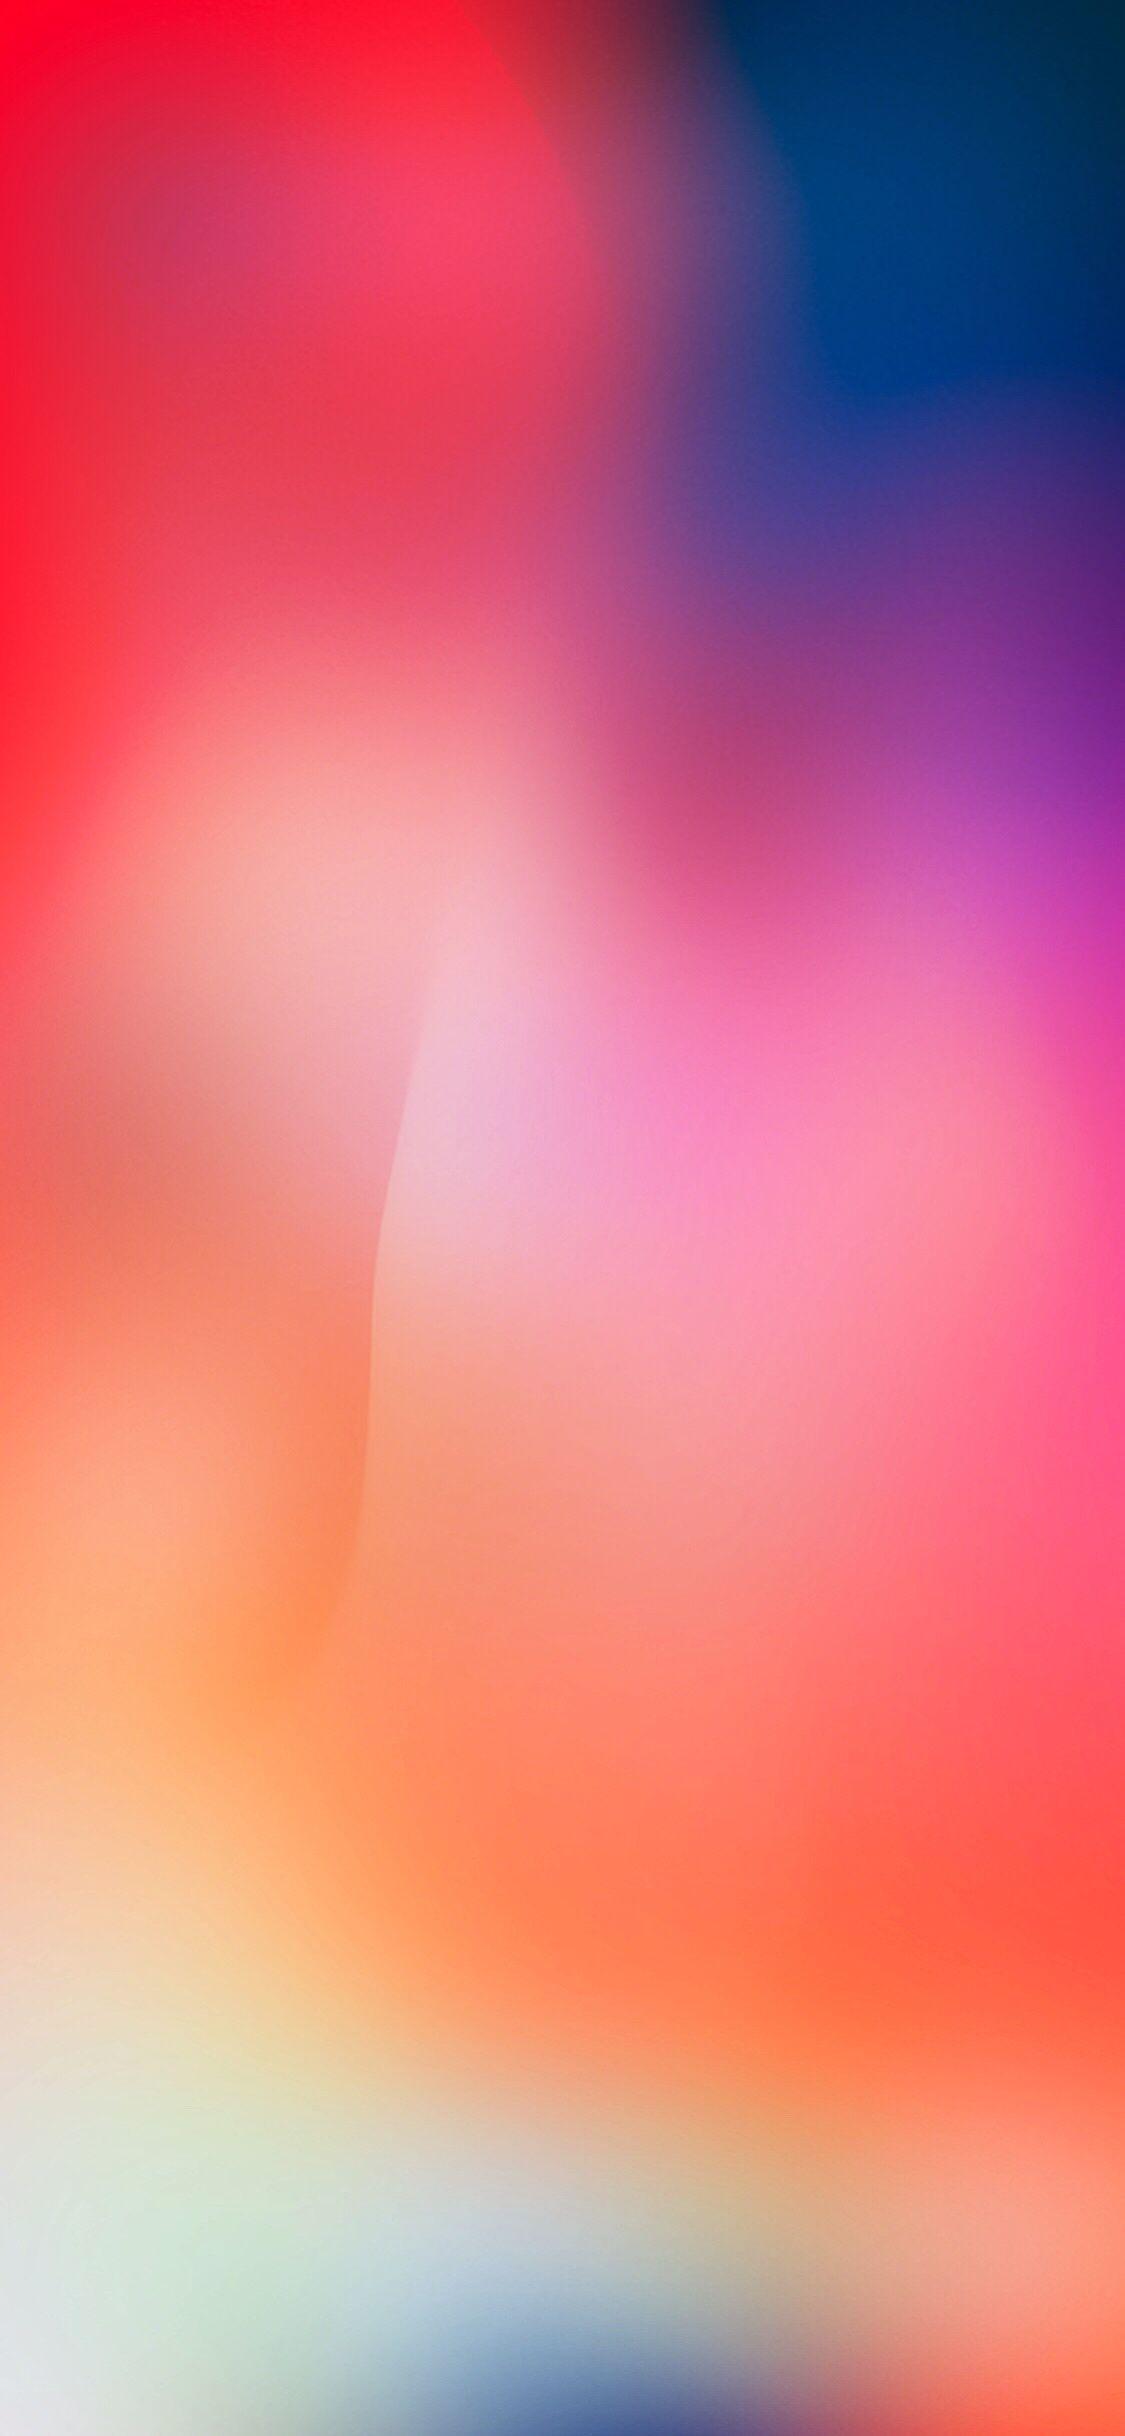 Red, Purple, Orange and Blue. Blue wallpaper iphone, iPhone wallpaper, Funny wallpaper